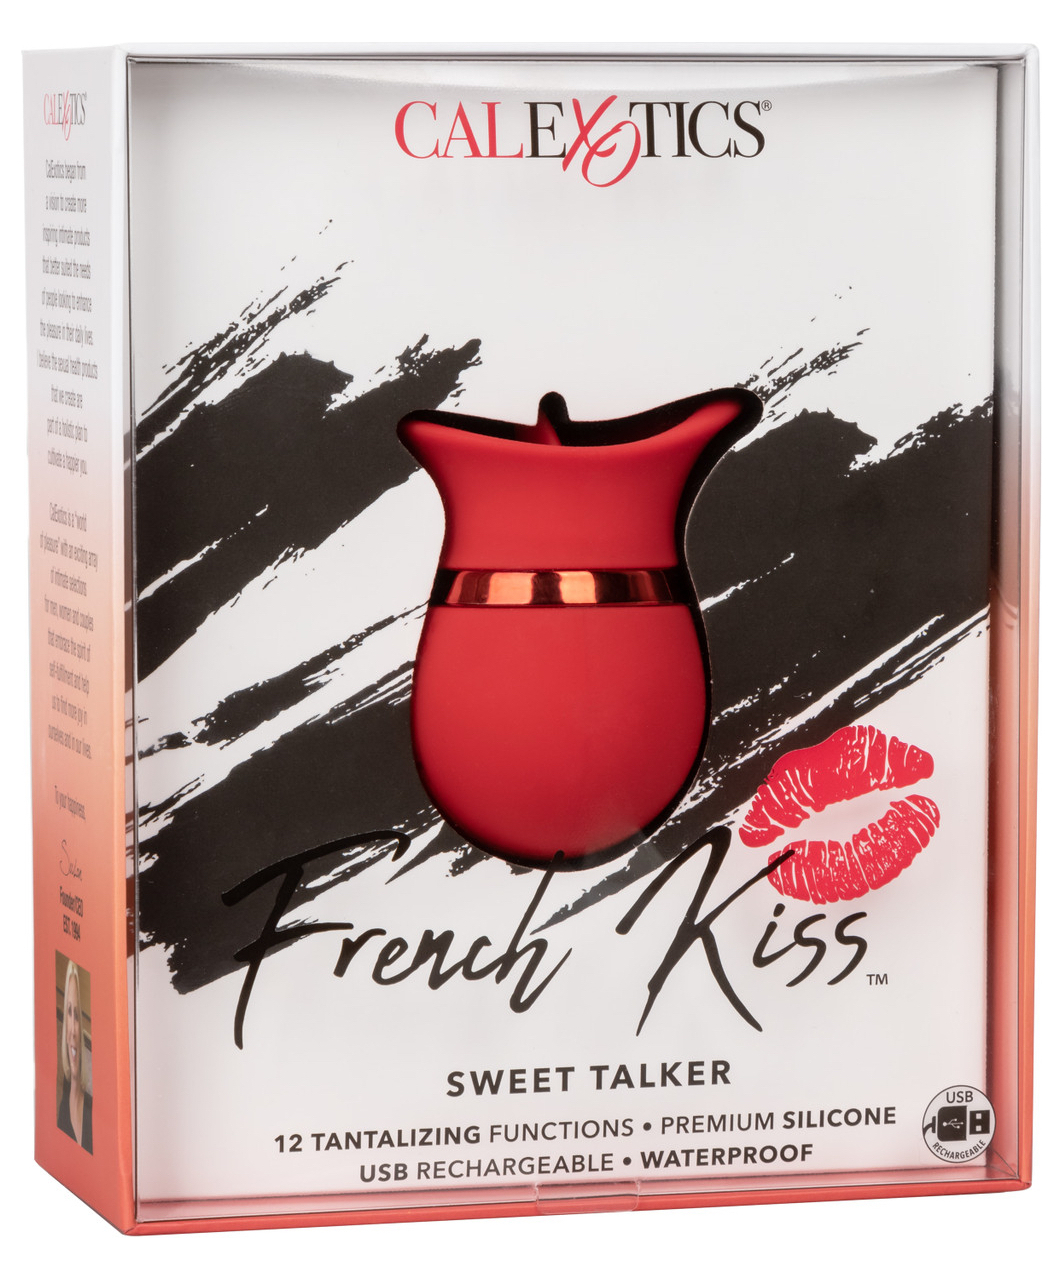 CalExotics French Kiss Sweet Talker stimulaatot